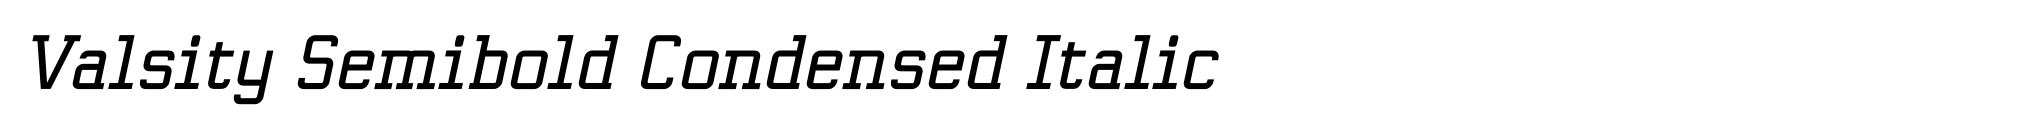 Valsity Semibold Condensed Italic image